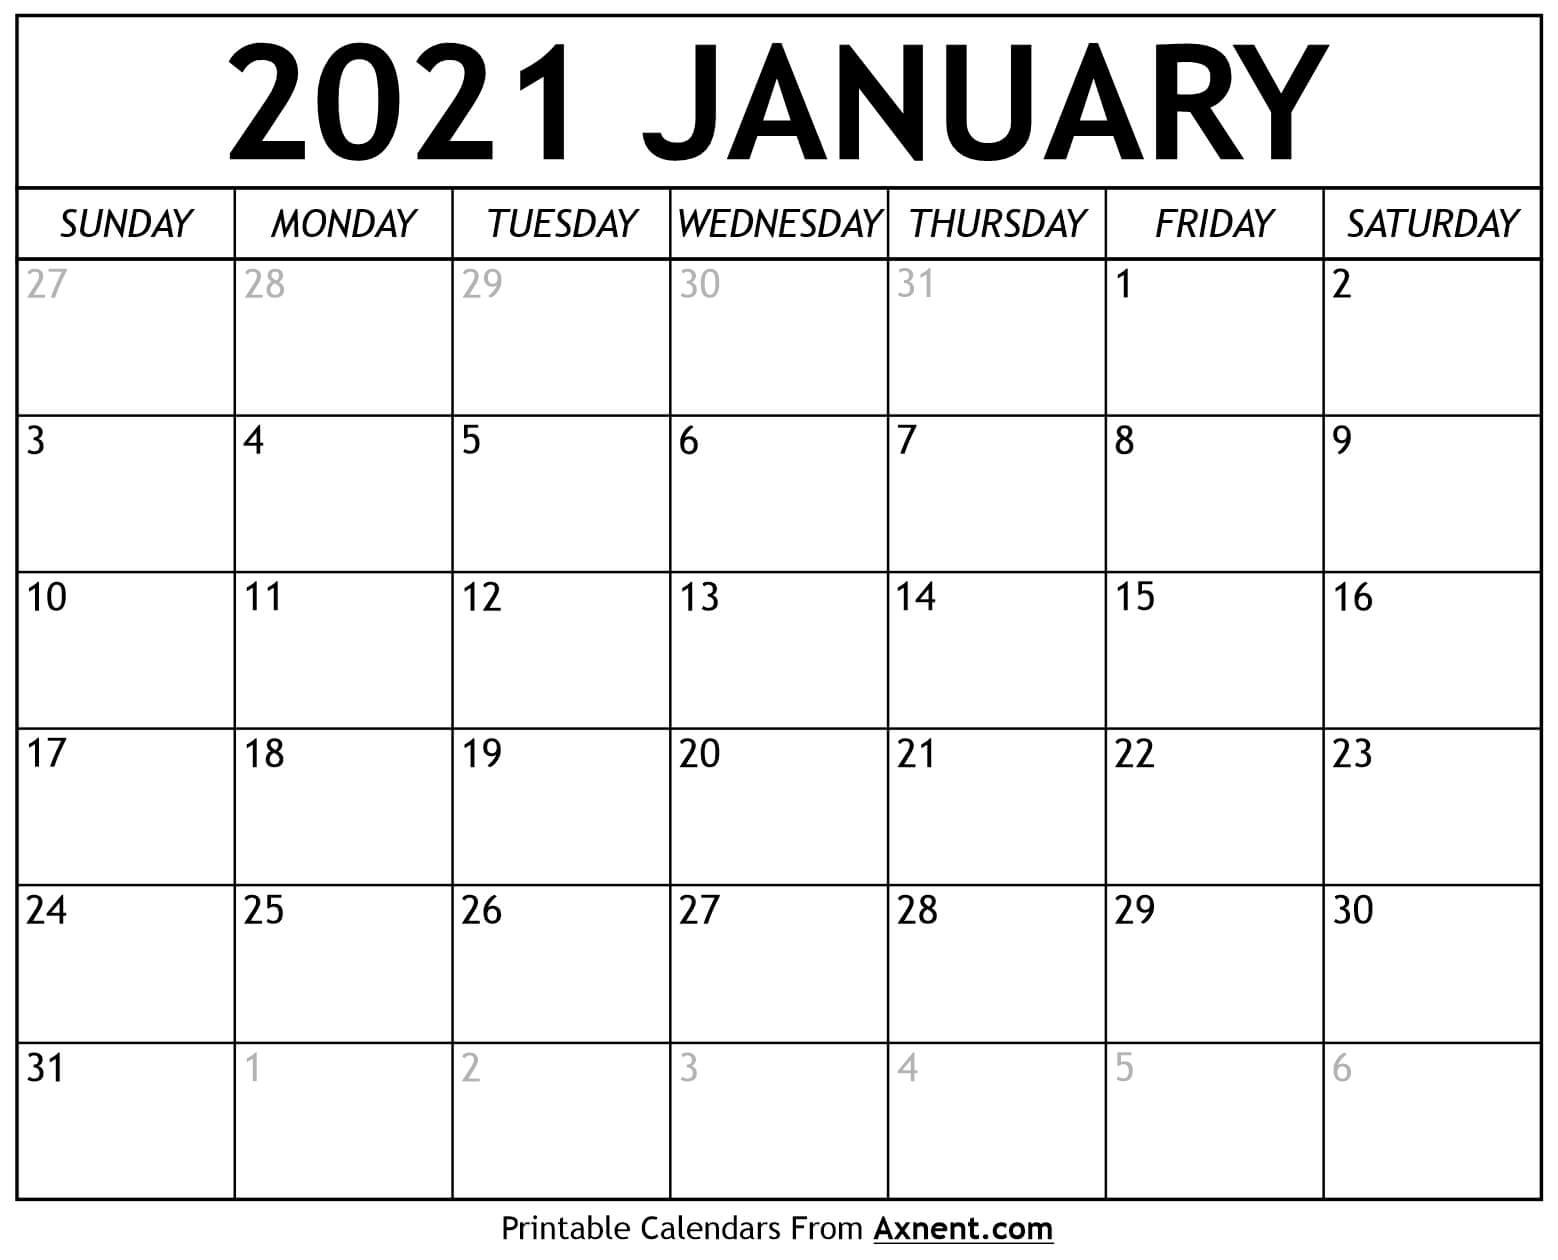 Get January 2021 Blank Calendar Motivated